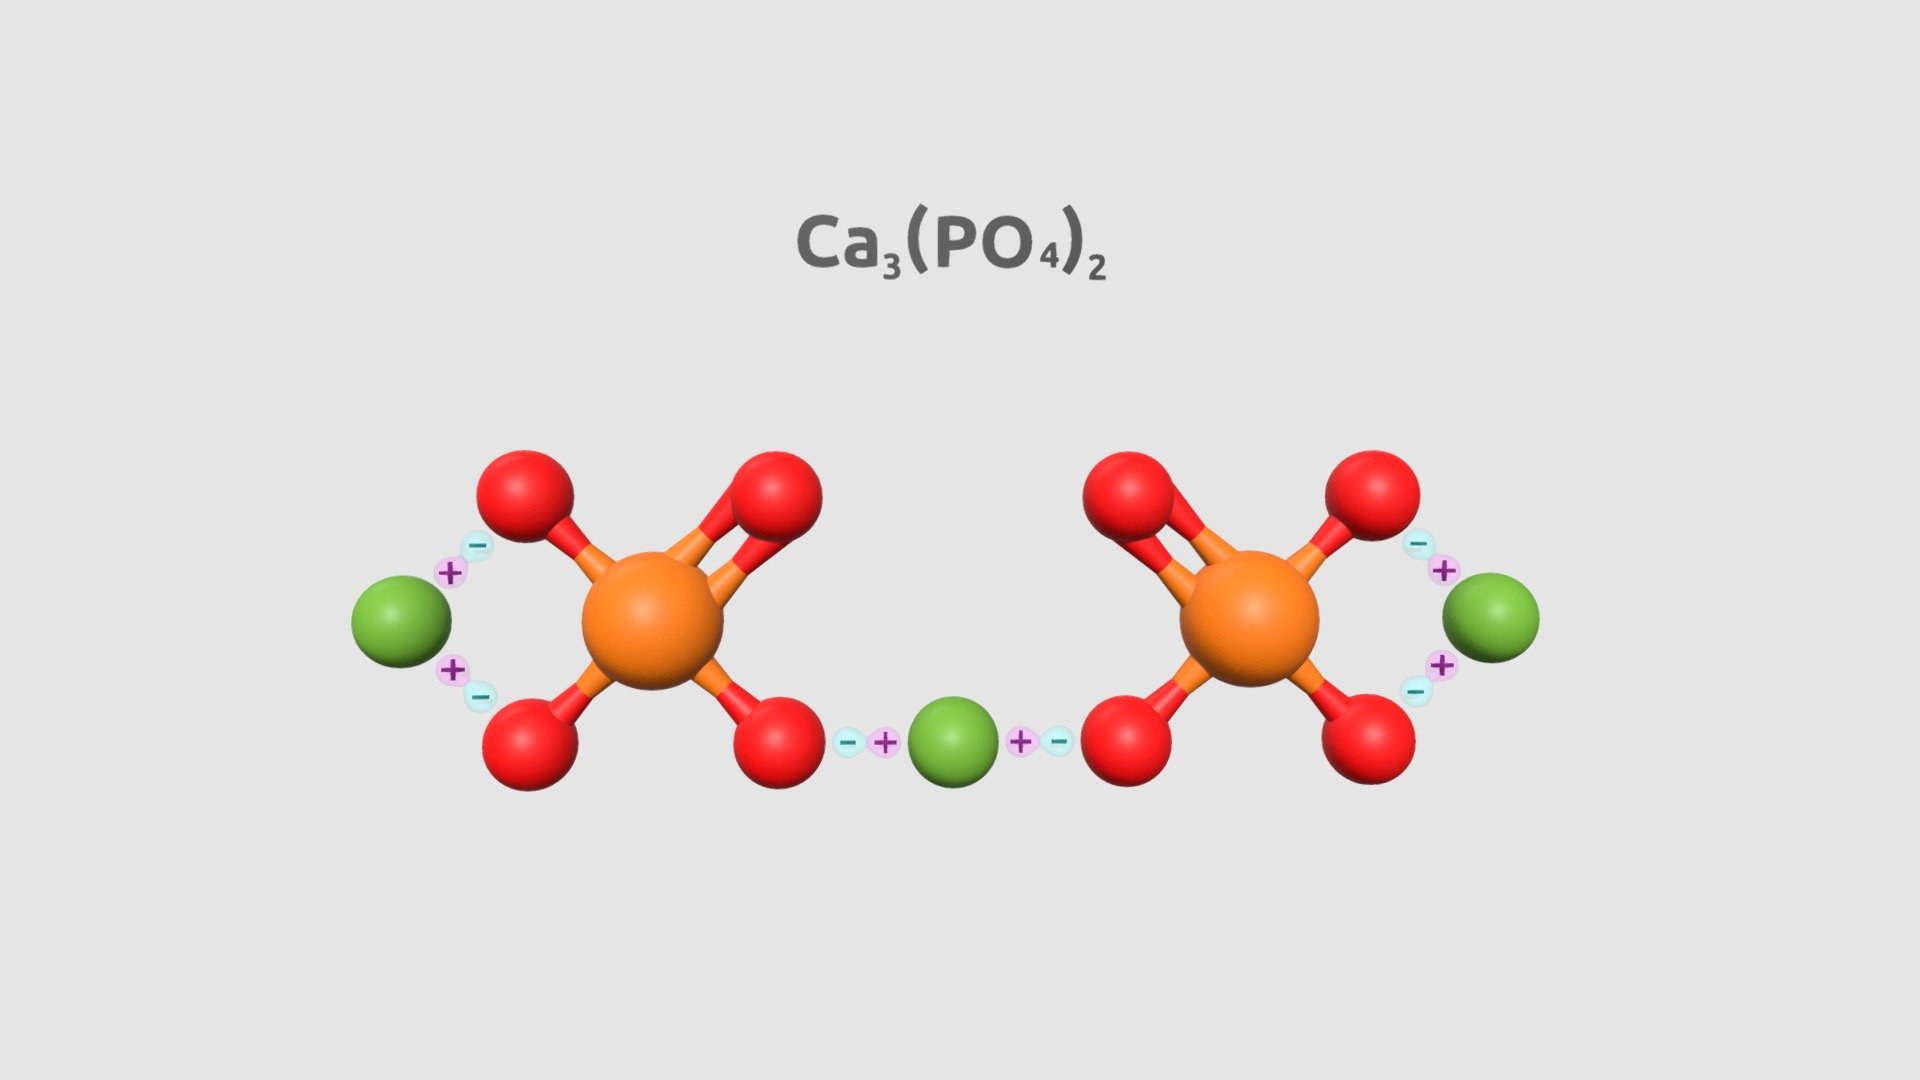 Bao k3po4. Ортофосфат калия. Силикат калия ионы. Оротидин-5-фосфат. Силикат калия в природе.